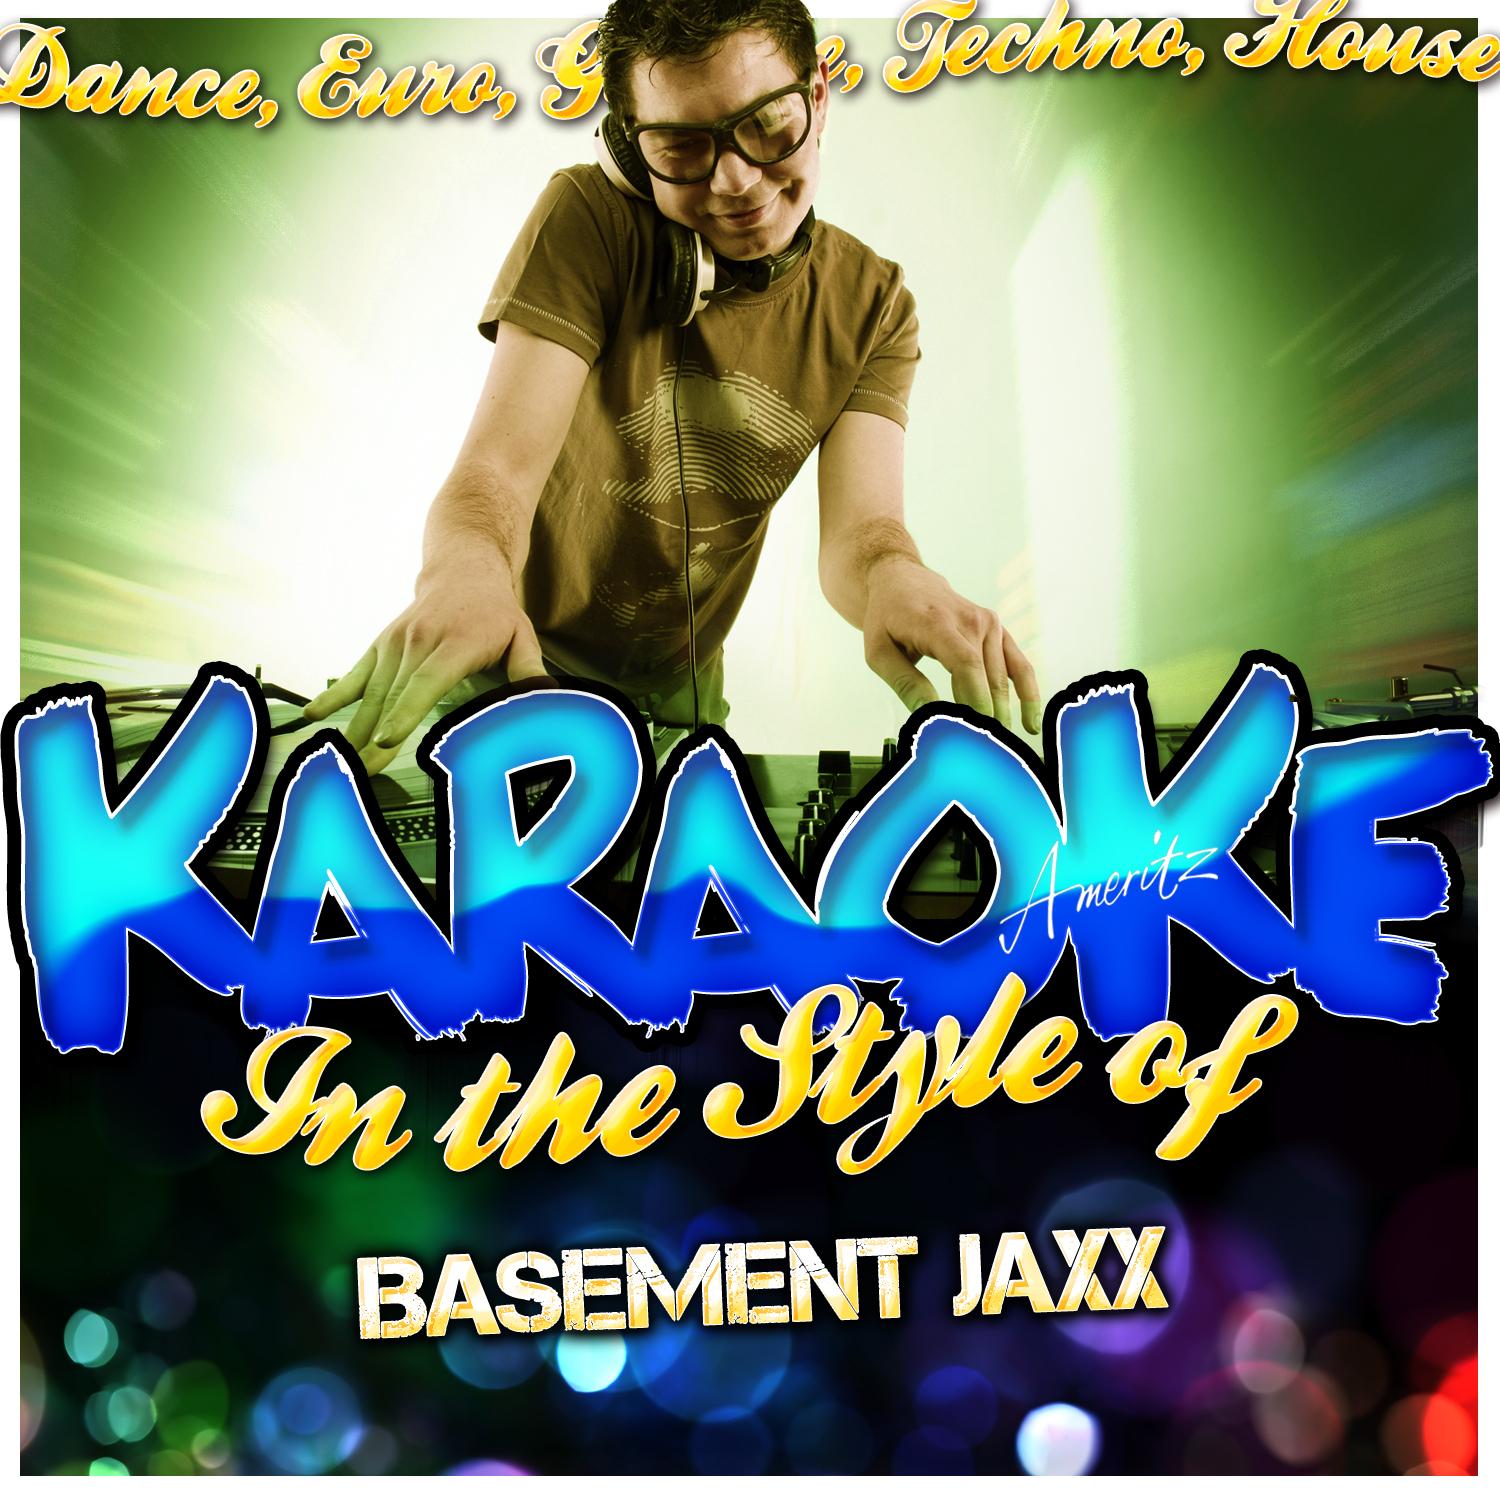 U Don't Know Me (In the Style of Lisa Kekaula & Basement Jaxx) [Karaoke Version]